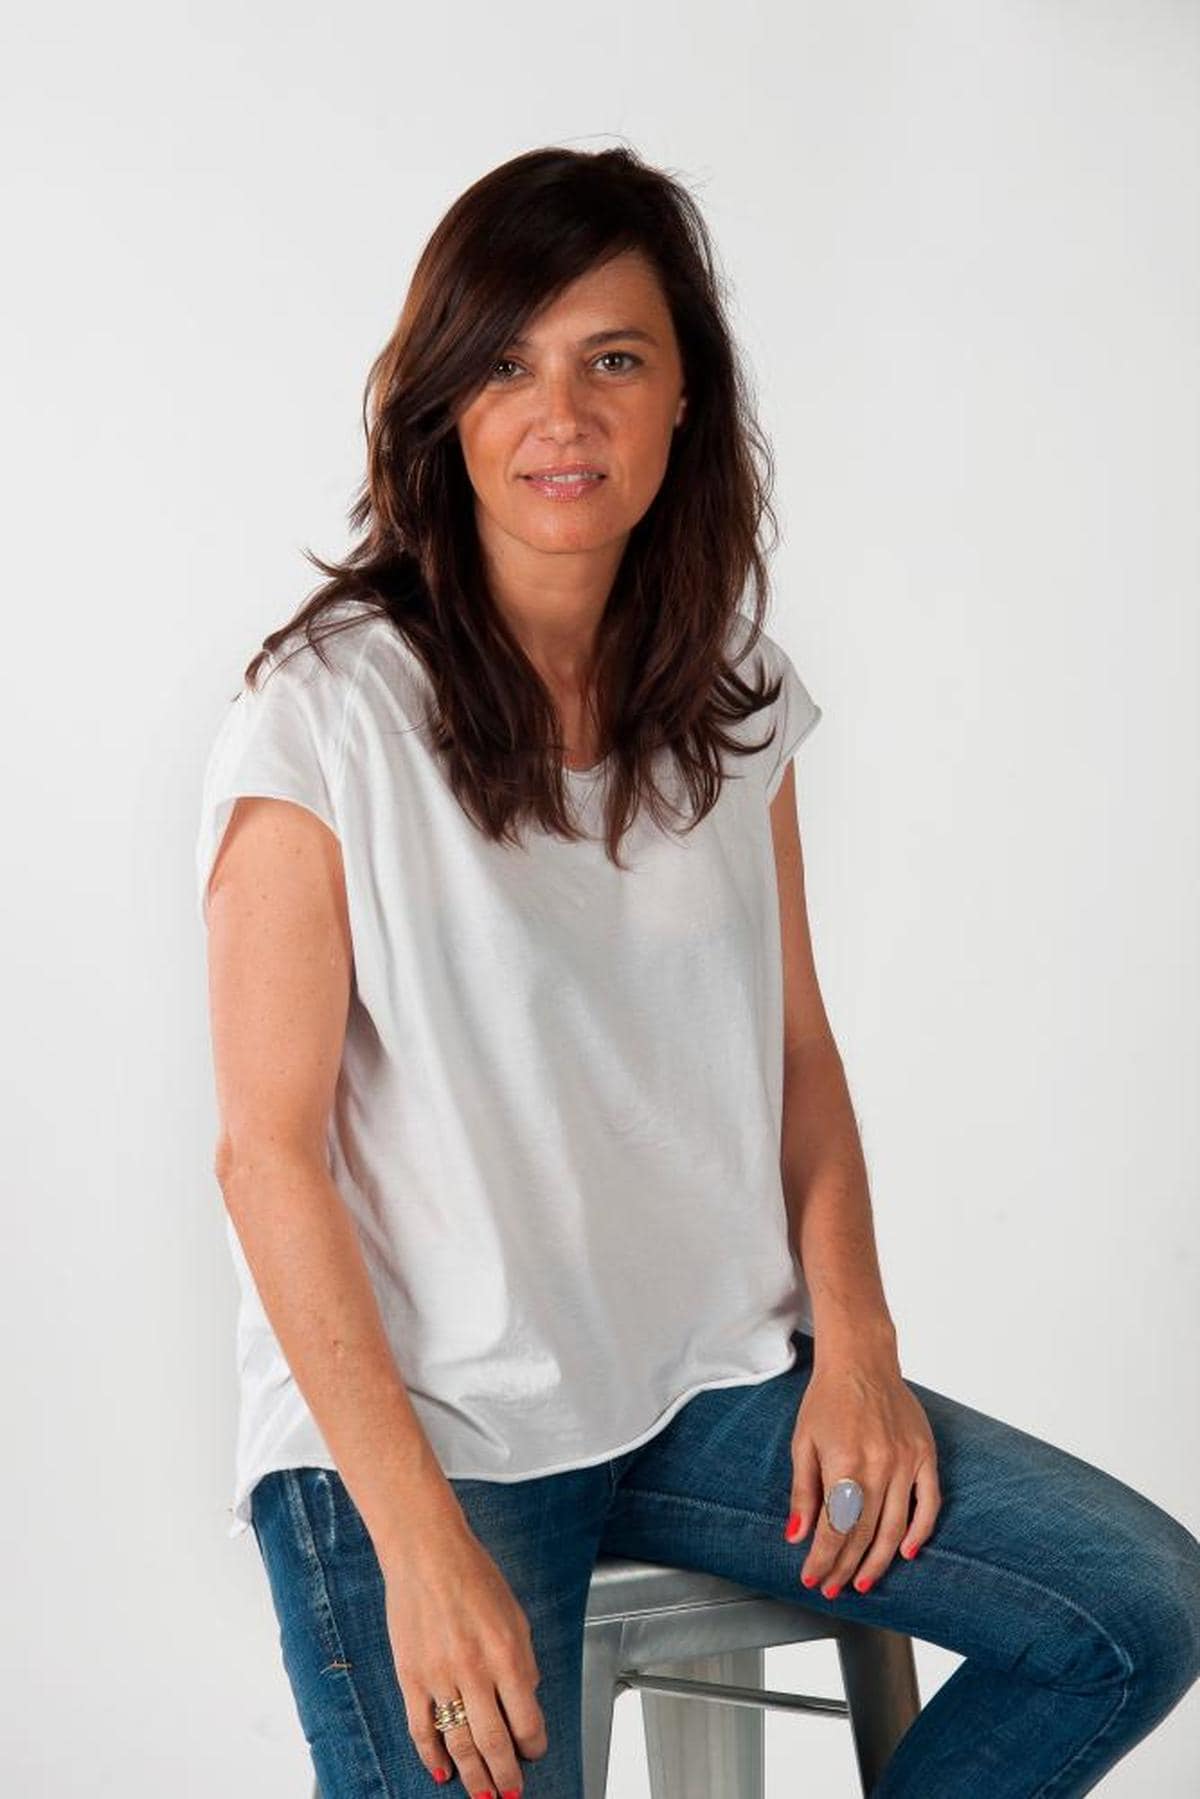 La salmantina Raquel Orejudo presenta su primera novela “Las Esperanzas”